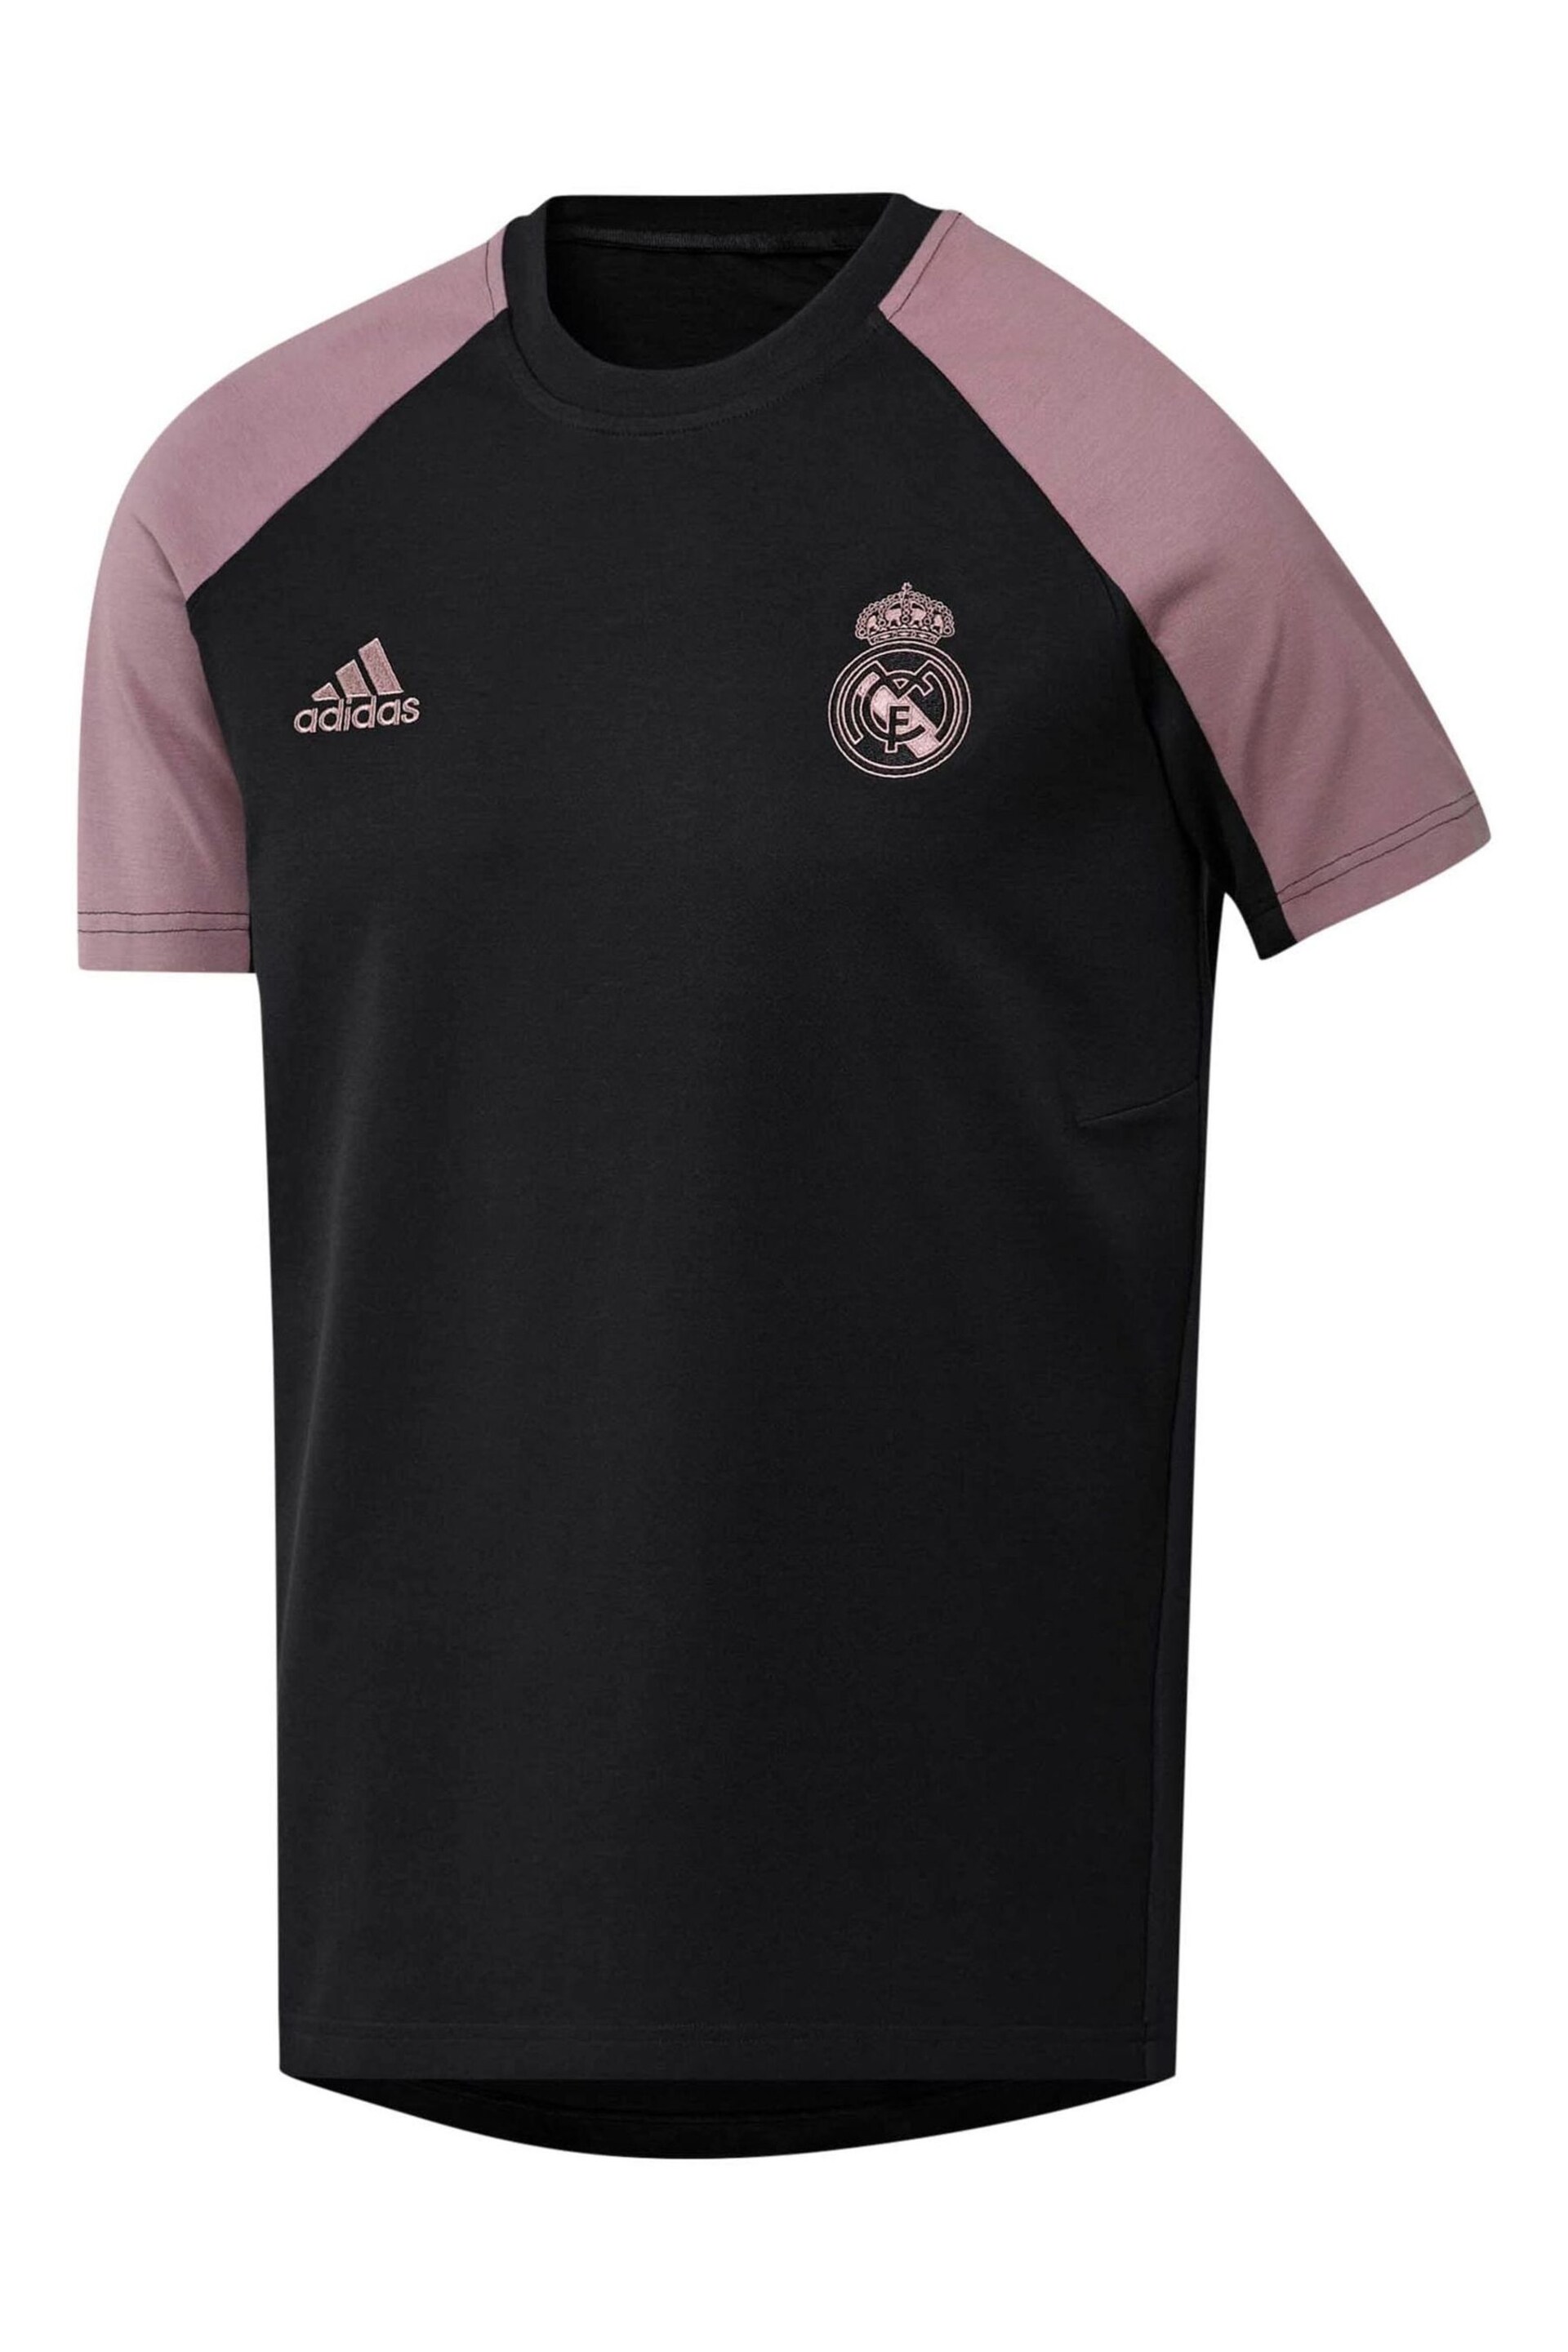 adidas Black Real Madrid Travel T-Shirt - Image 2 of 3